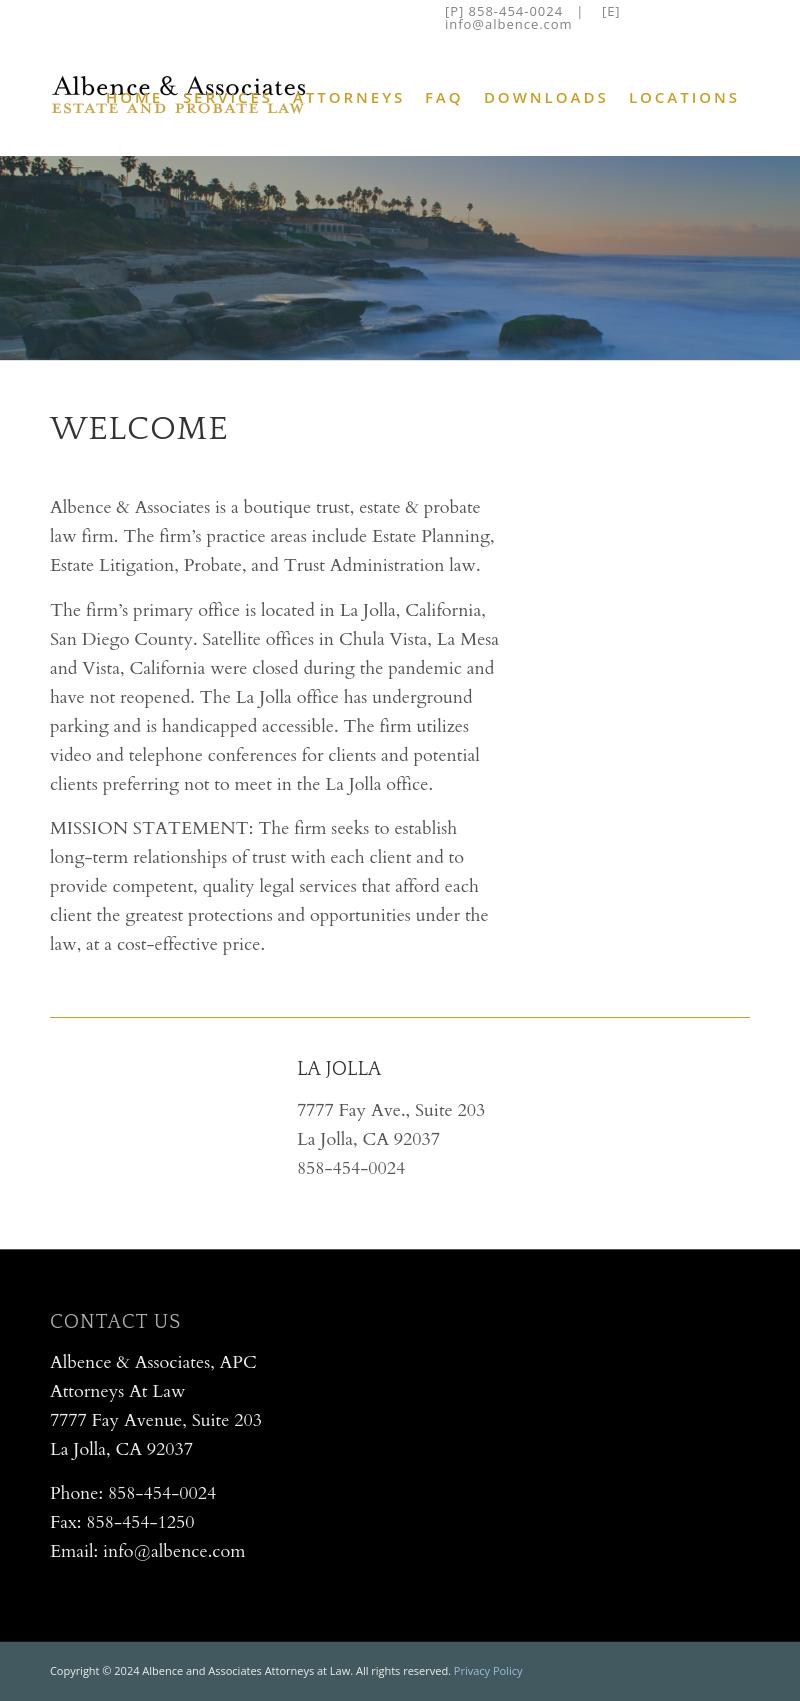 Albence & Associates - La Jolla CA Lawyers